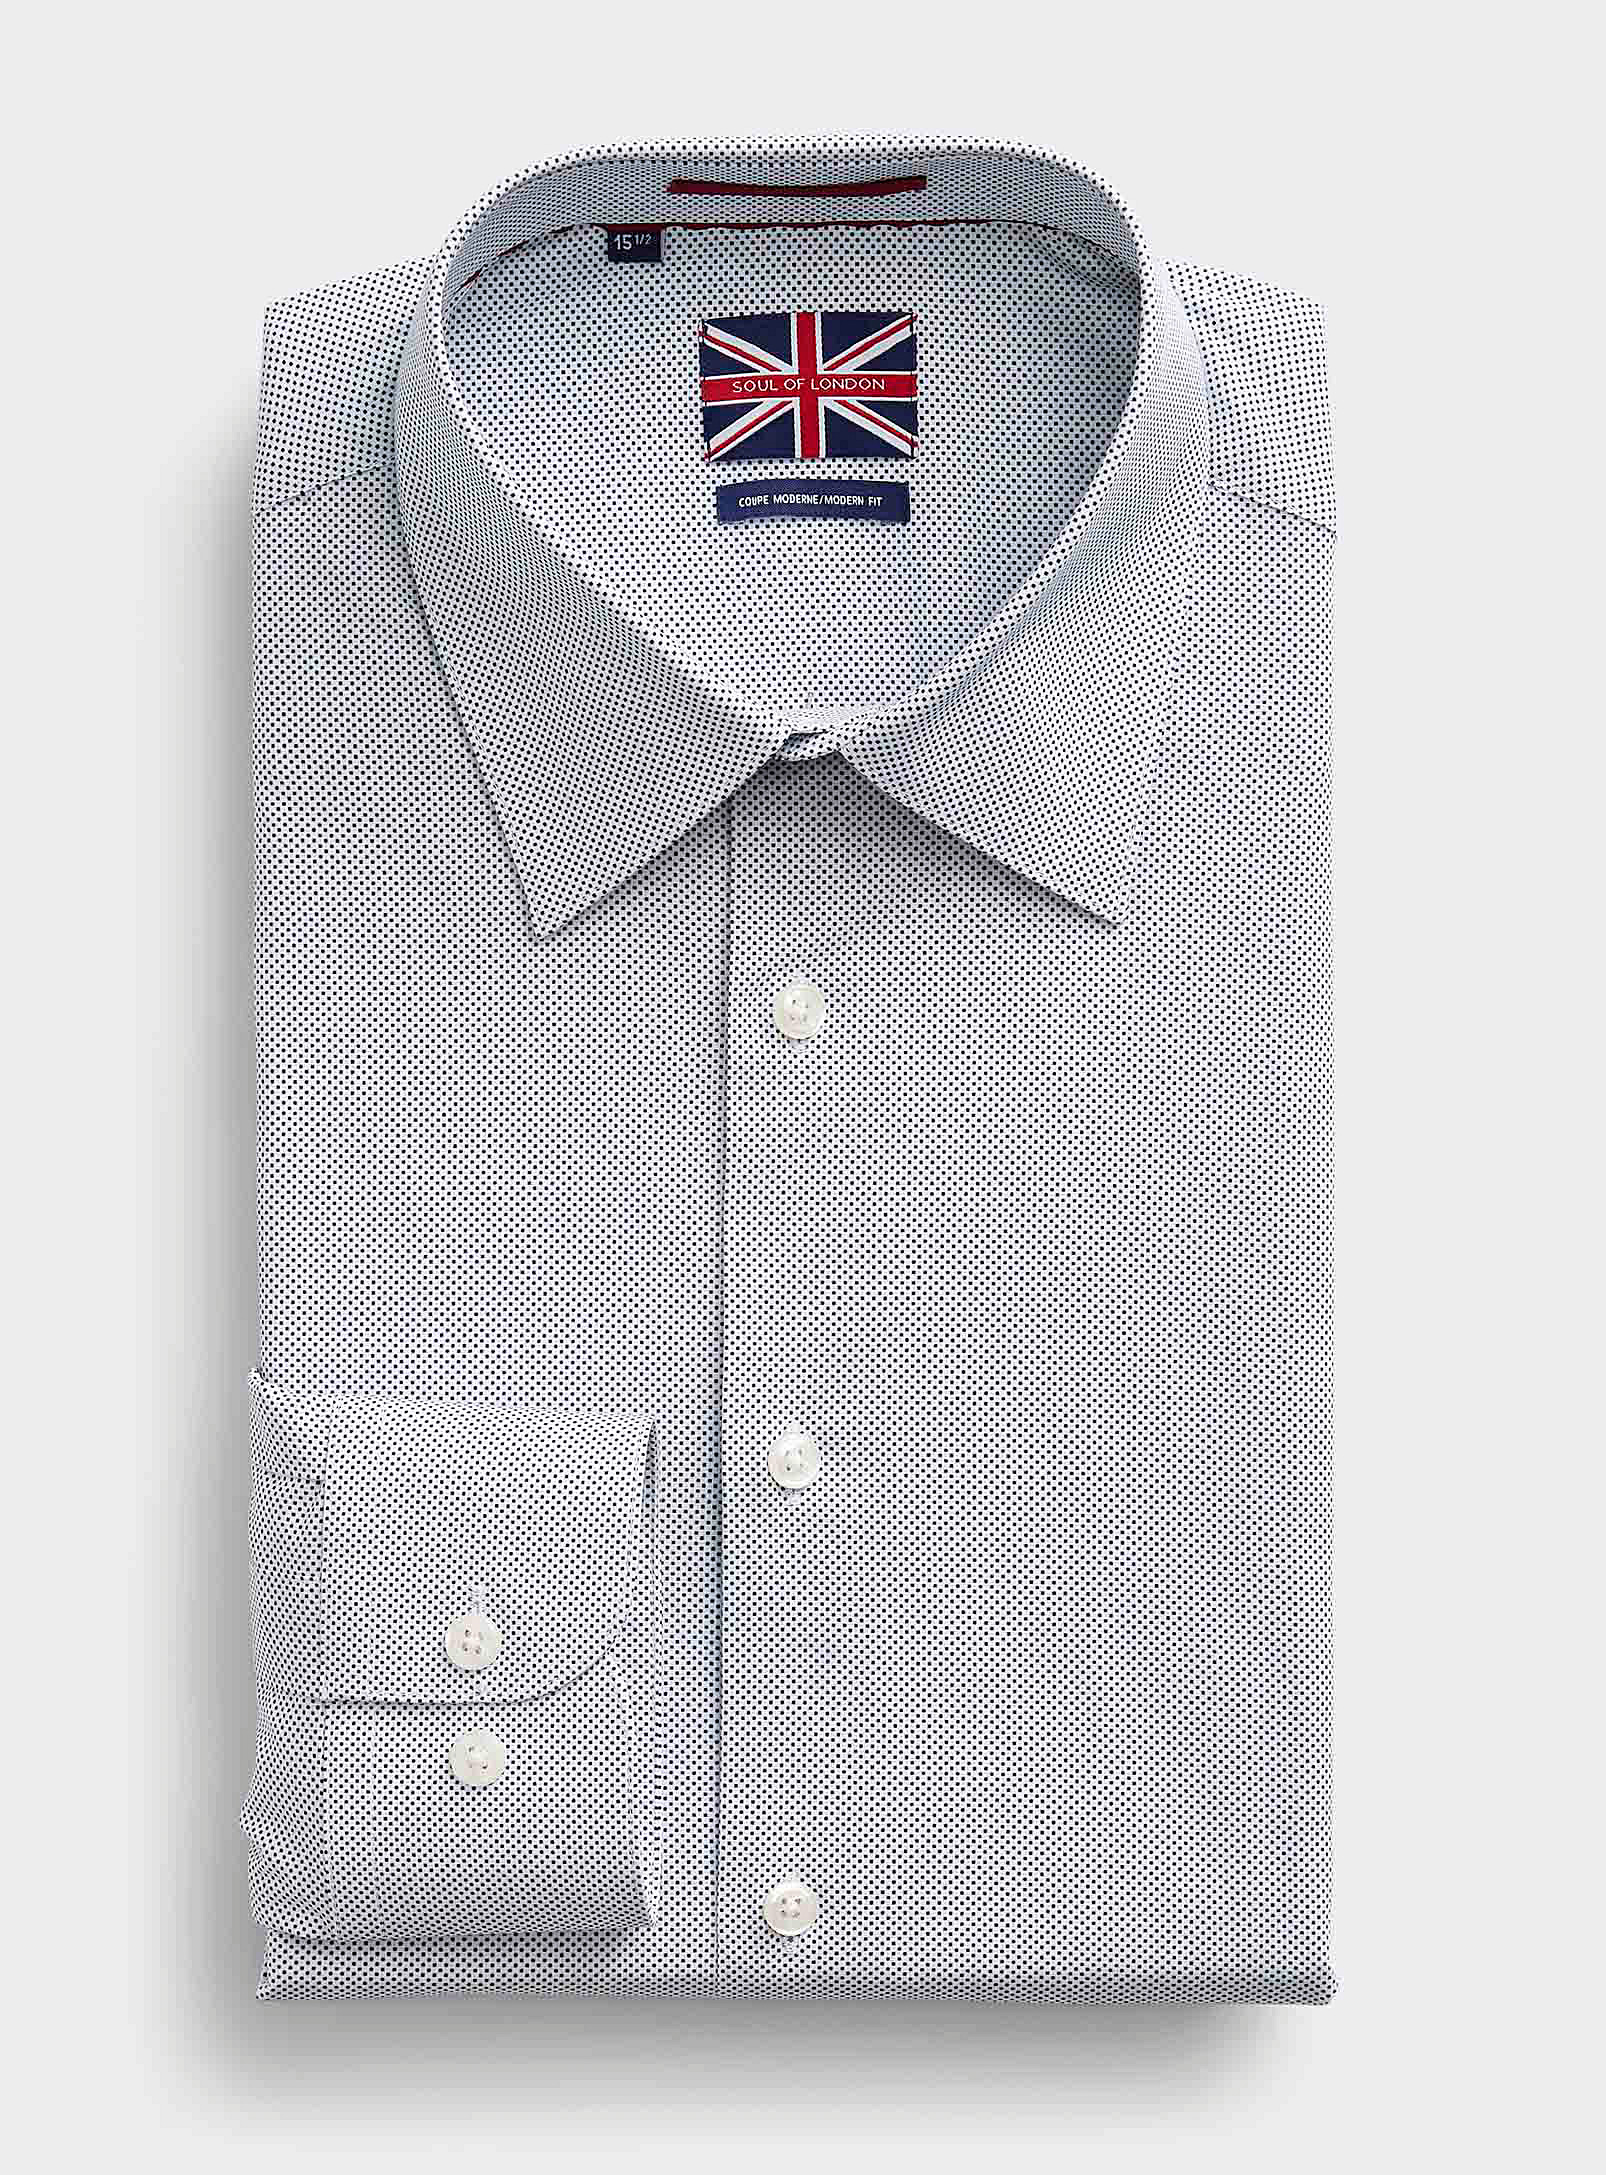 Soul of London - Men's Optical mini-check stretch shirt Modern fit